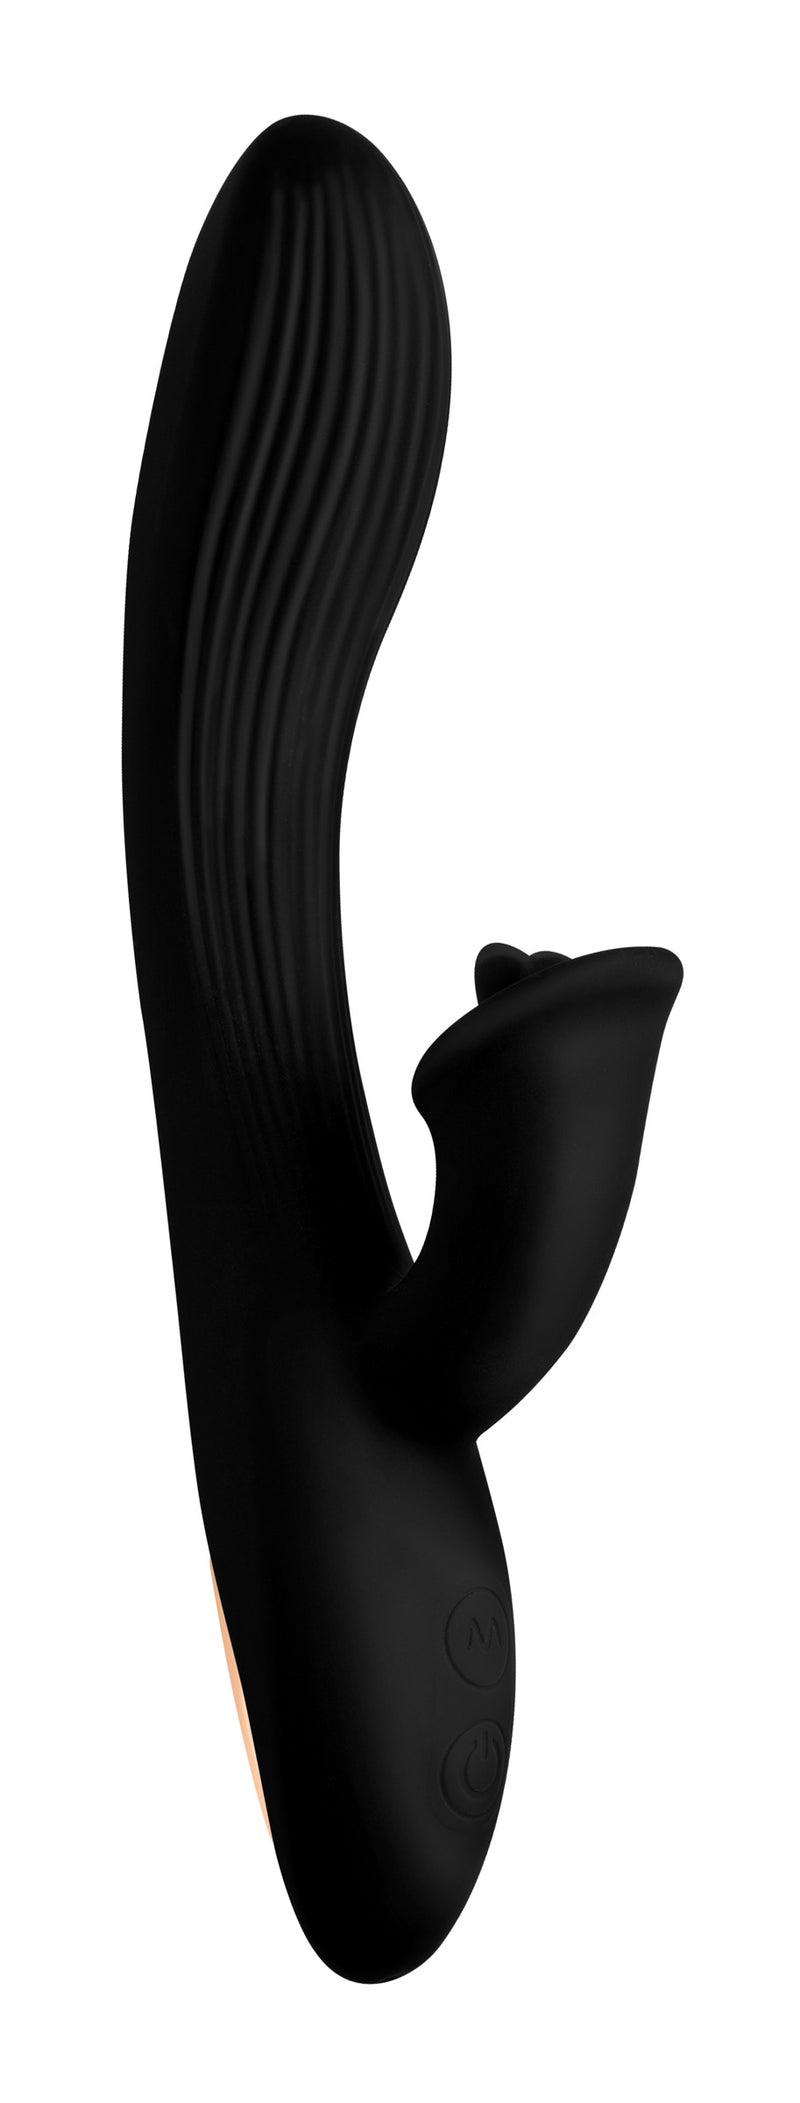 7X Bendable Silicone Clit Stimulating Vibrator vibesextoys from Wonder Vibes